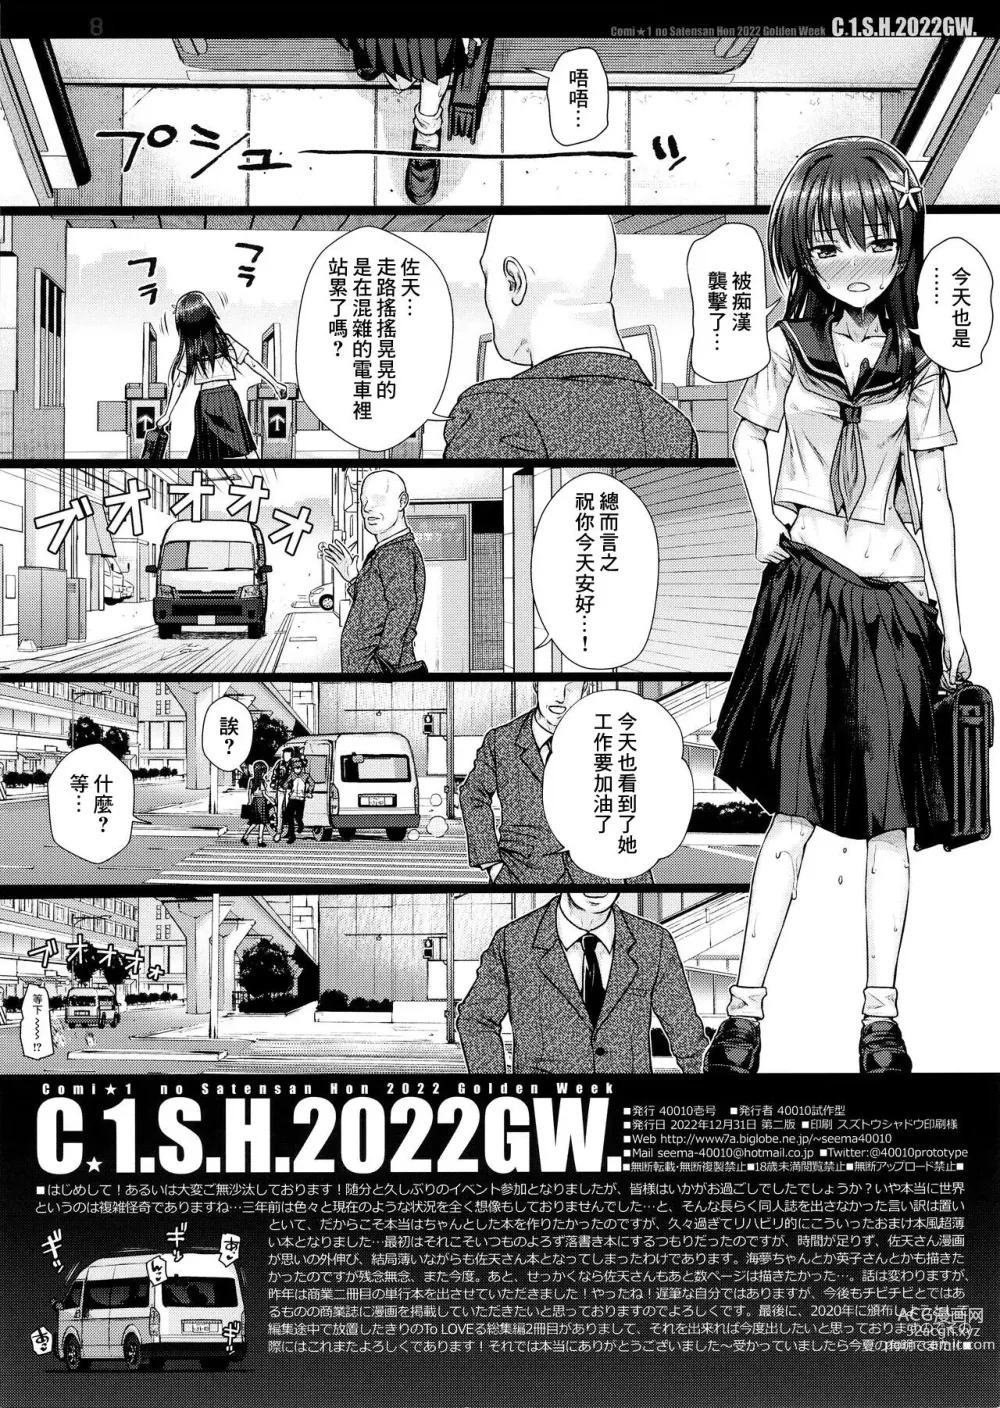 Page 8 of doujinshi C☆1.S.H.2022GW.